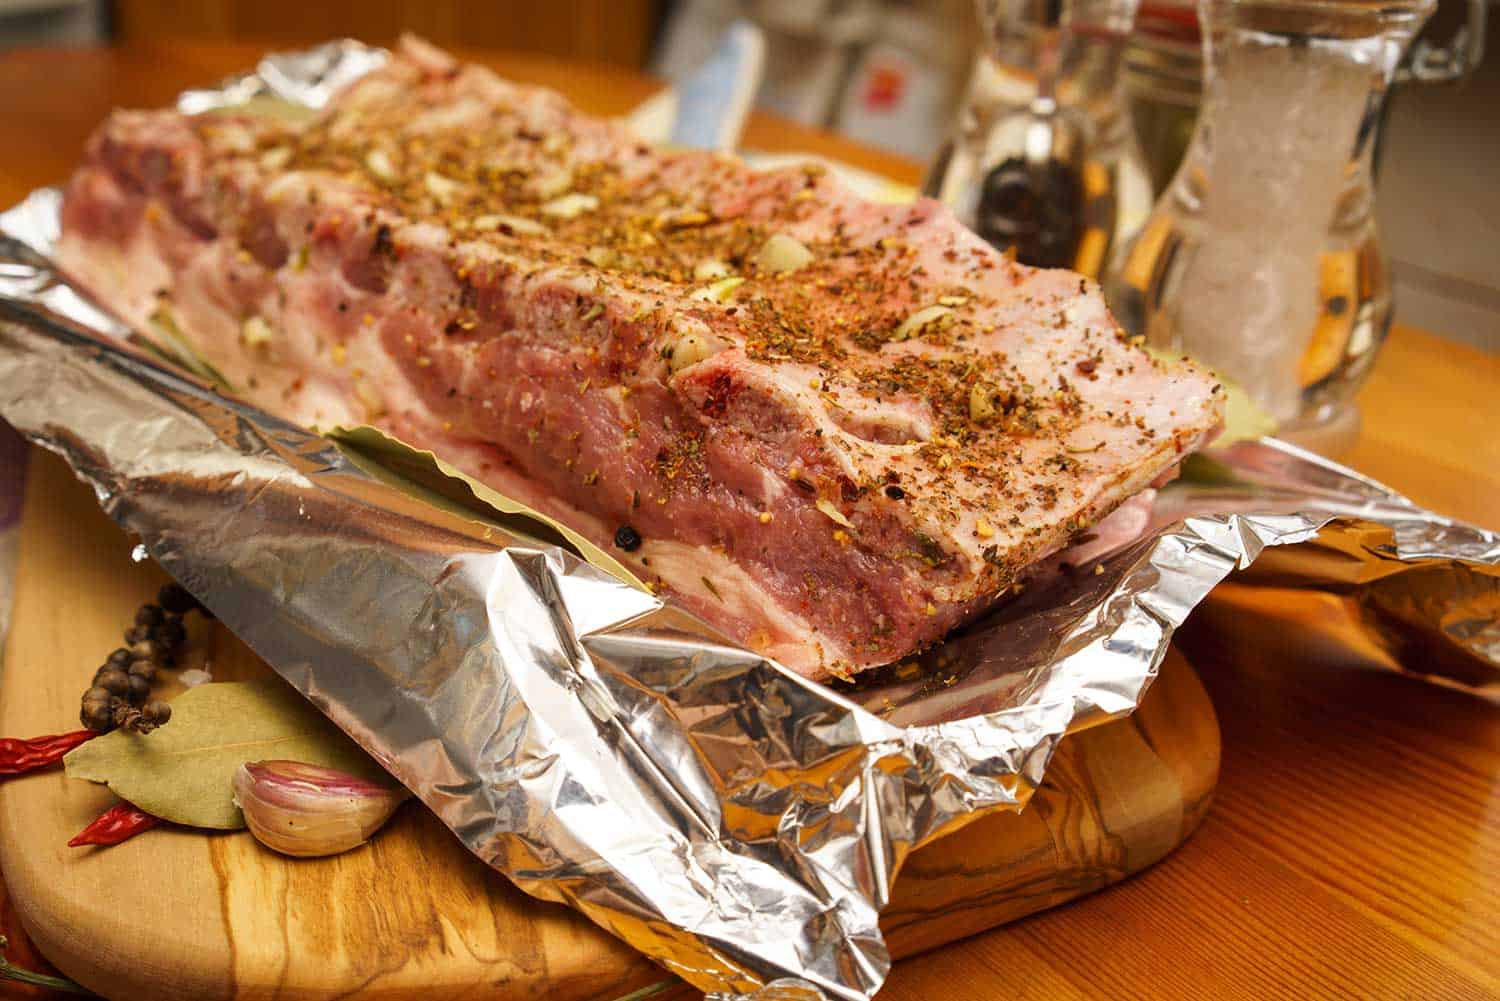 Fresh pork ribs marinated and prepared on foil